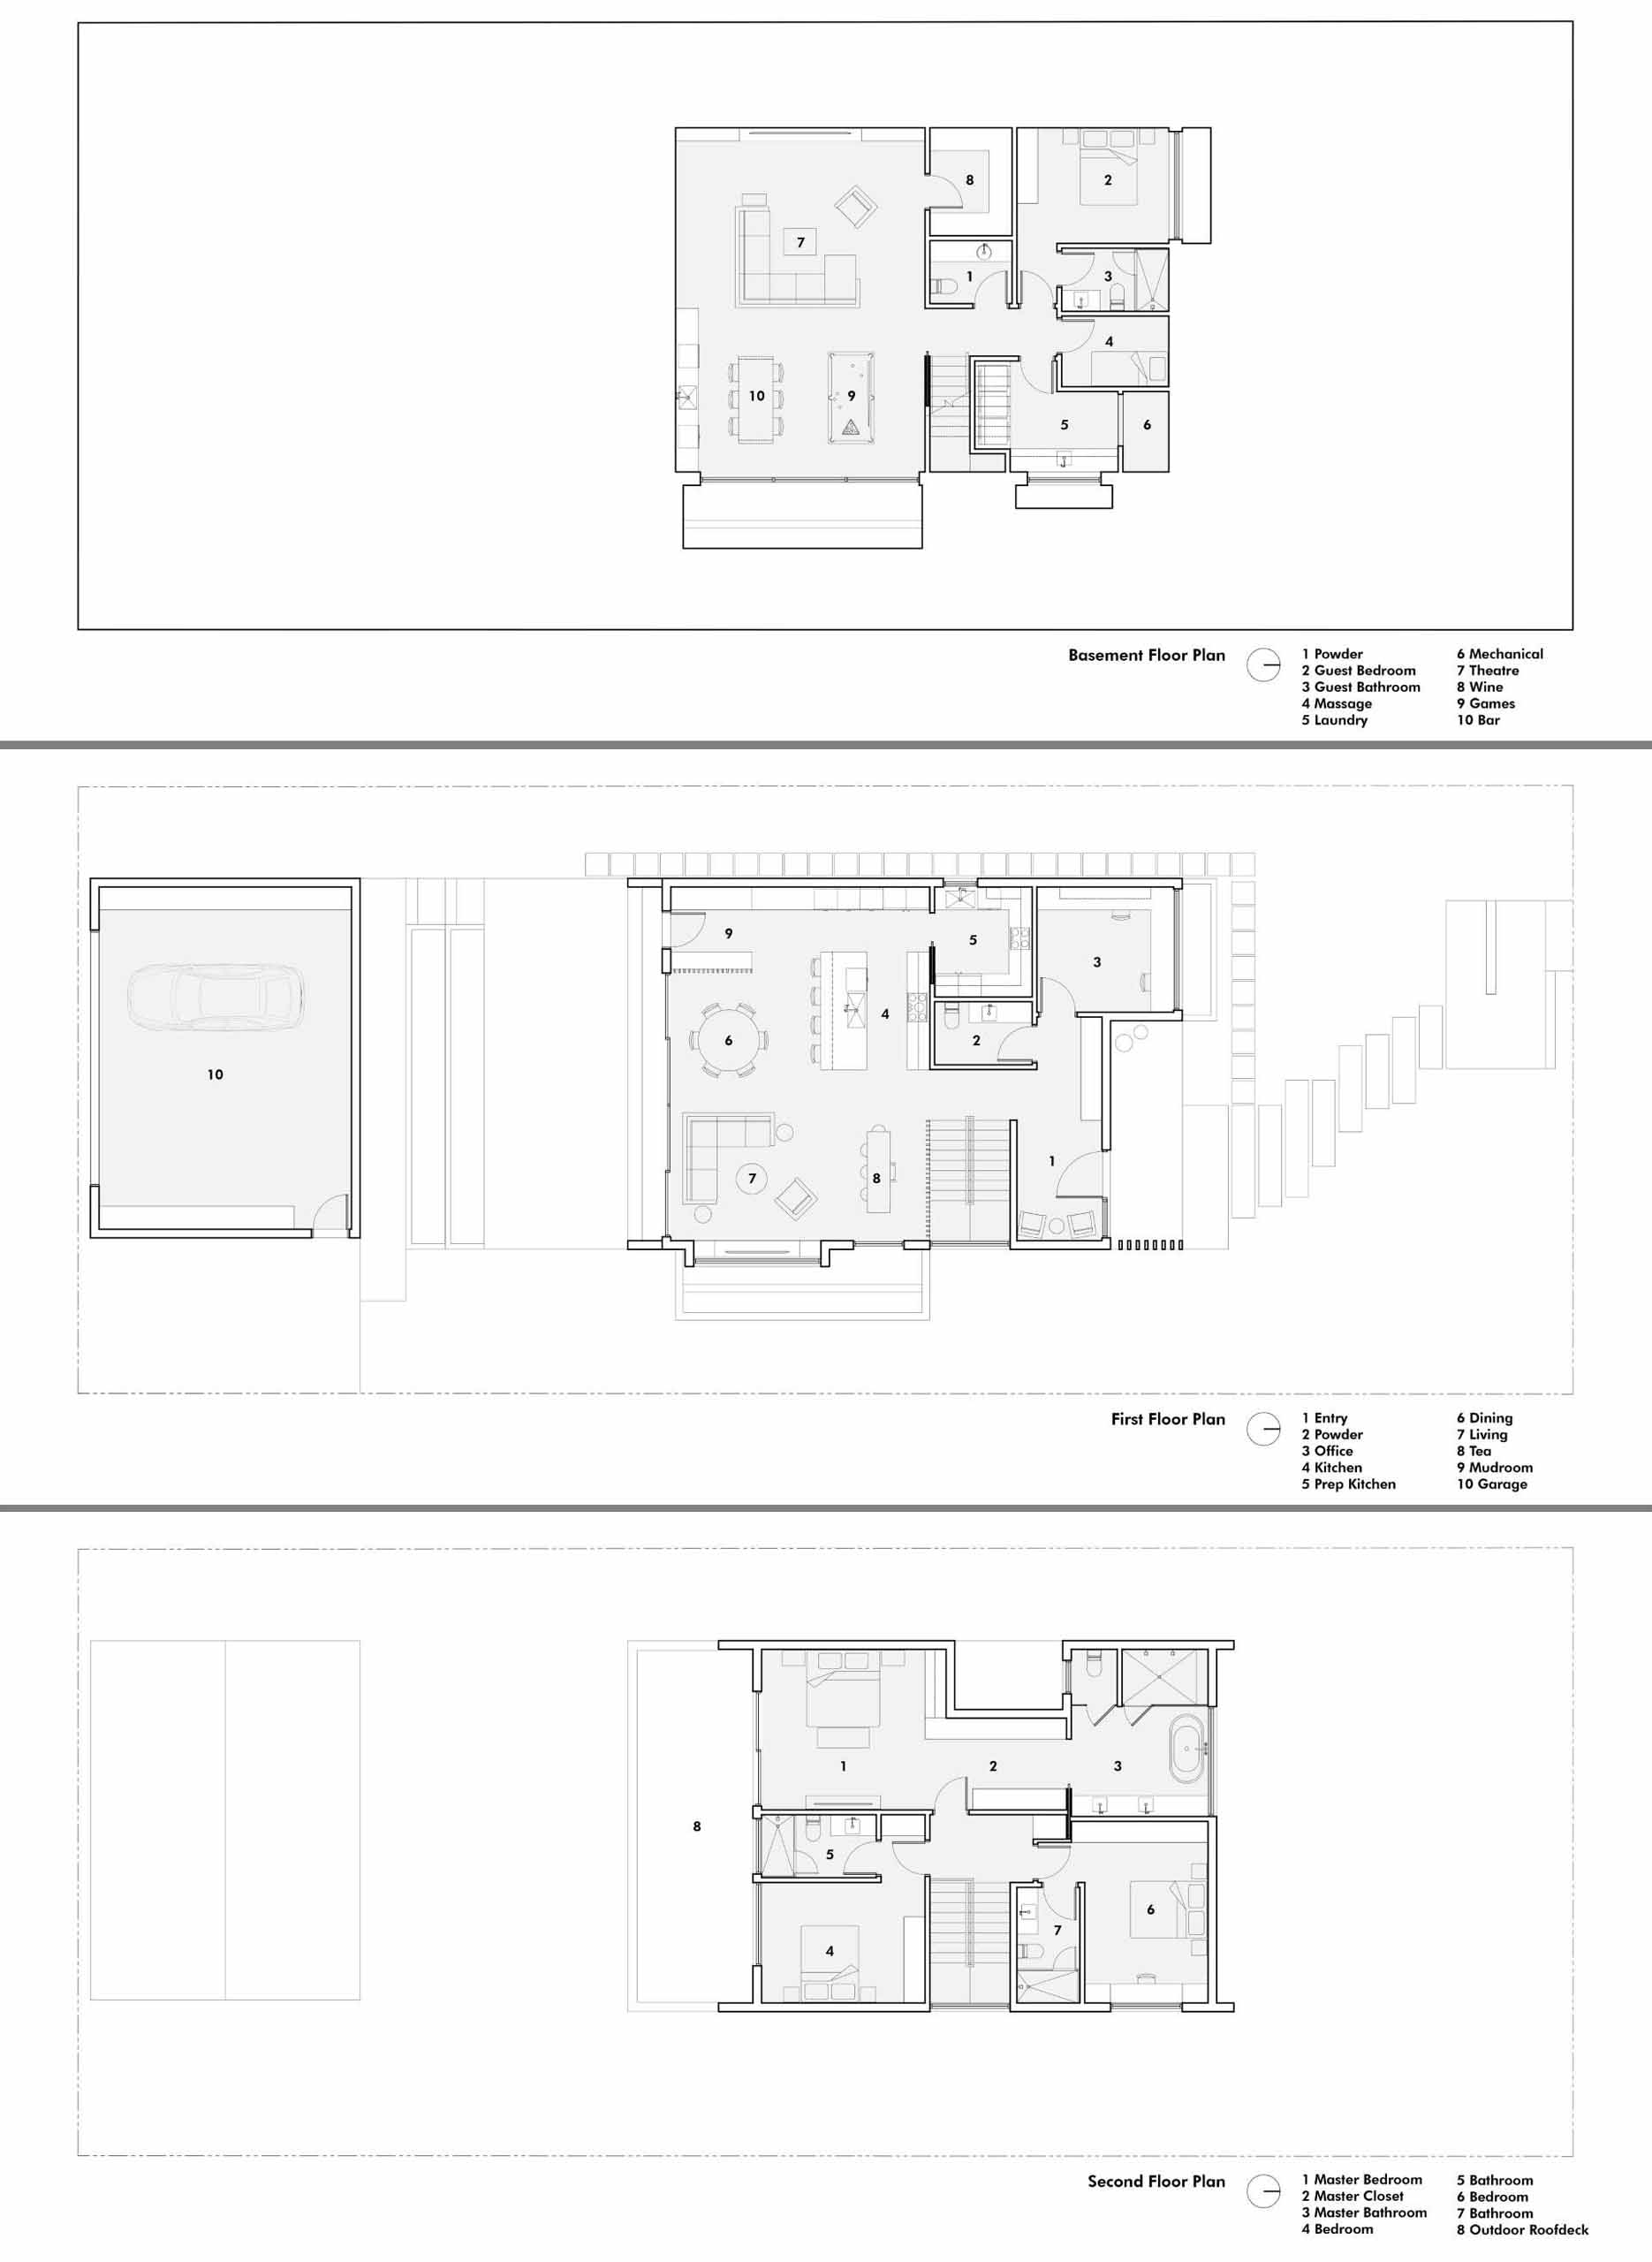 The floor plan of a modern three-storey home.